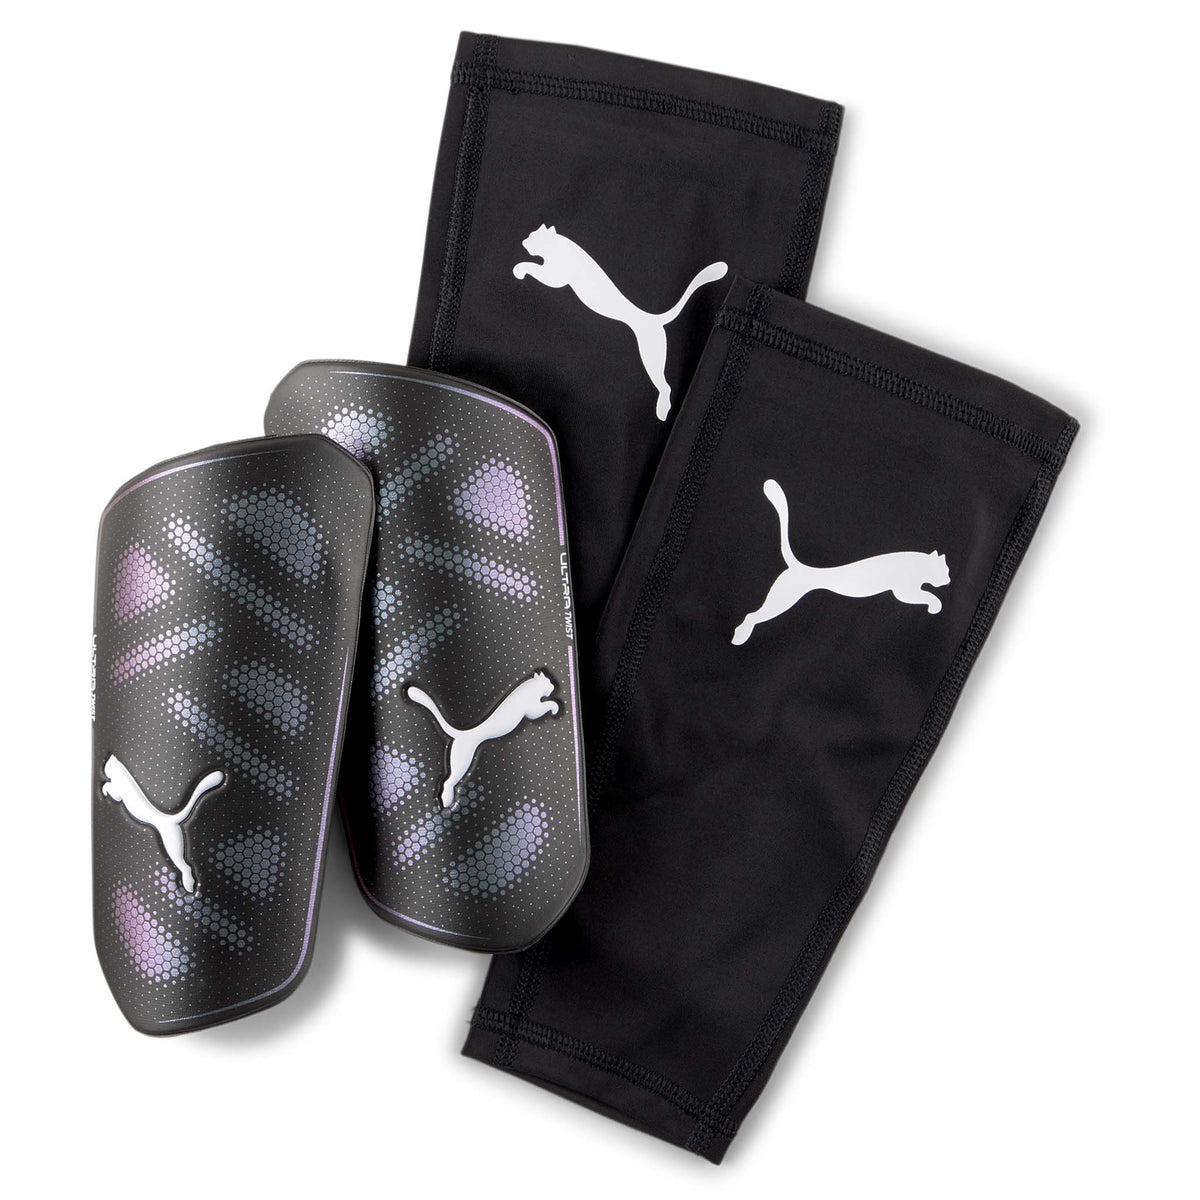 Puma ultra Twist Sleeve protège-tibias de soccer avec manchons noir blanc